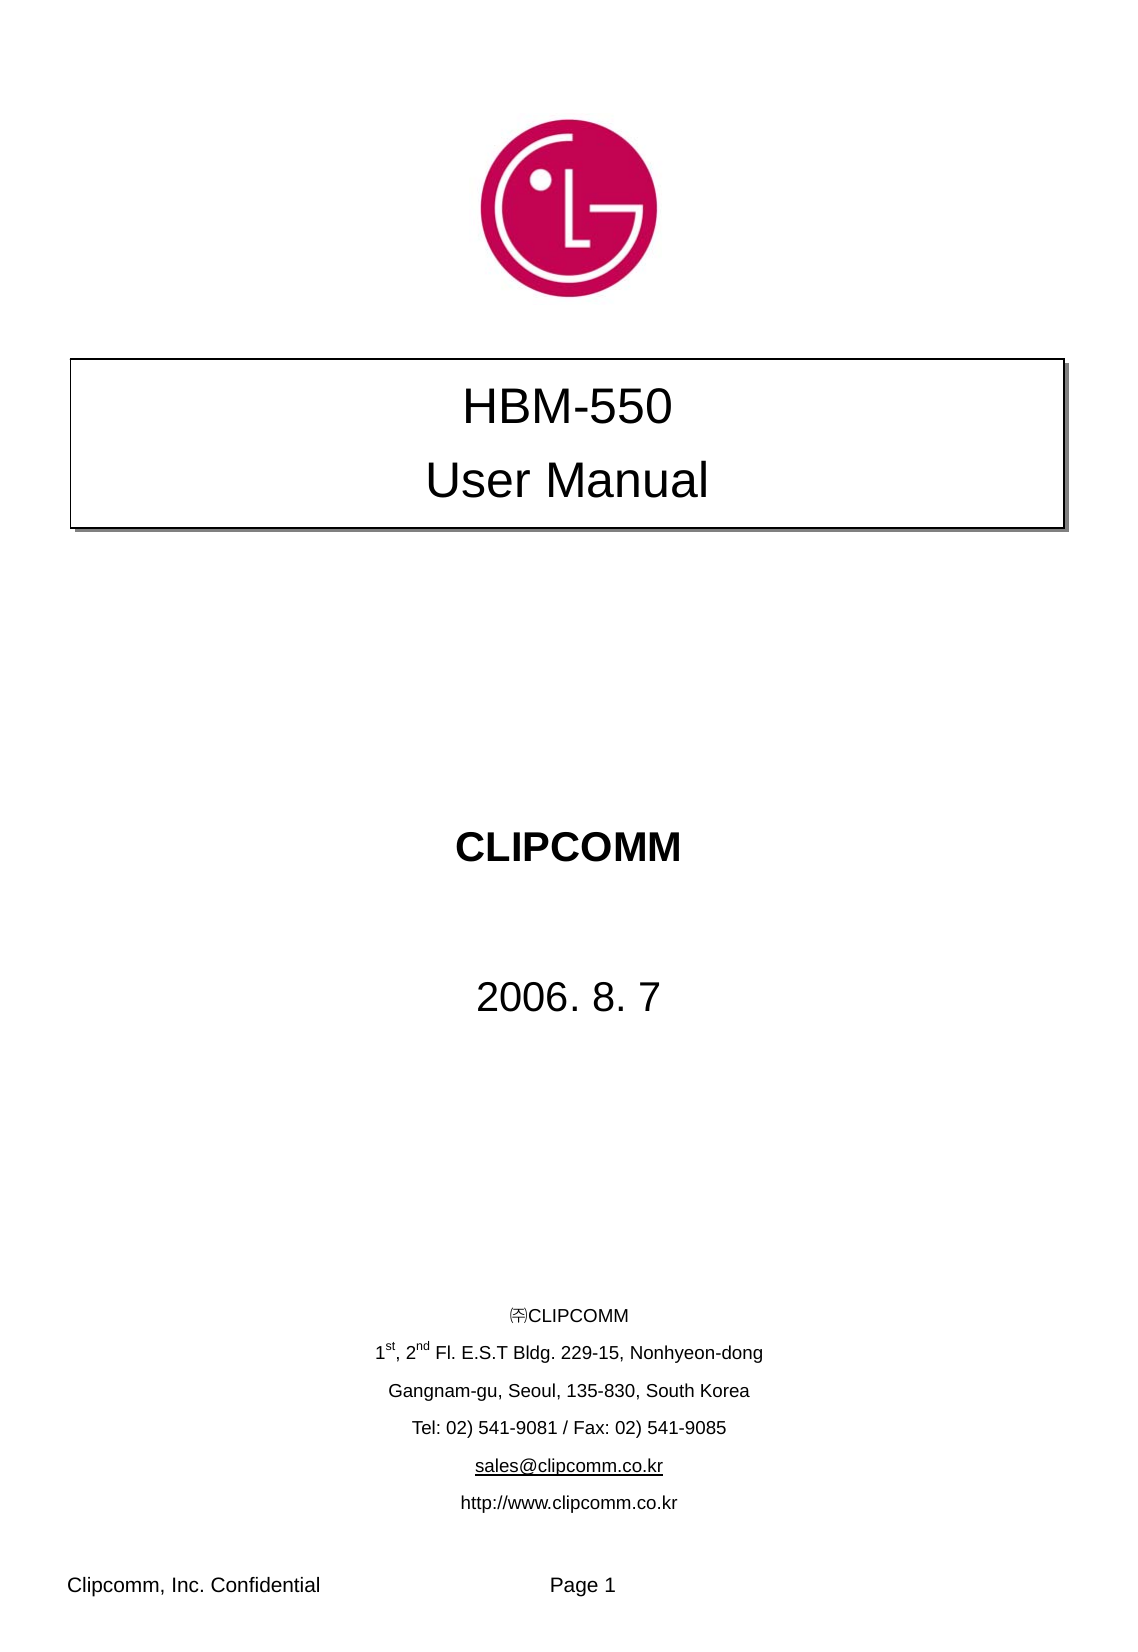 Clipcomm, Inc. Confidential                Page 1               CLIPCOMM  2006. 8. 7          ㈜CLIPCOMM 1st, 2nd Fl. E.S.T Bldg. 229-15, Nonhyeon-dong Gangnam-gu, Seoul, 135-830, South Korea Tel: 02) 541-9081 / Fax: 02) 541-9085 sales@clipcomm.co.kr http://www.clipcomm.co.kr HBM-550   User Manual 